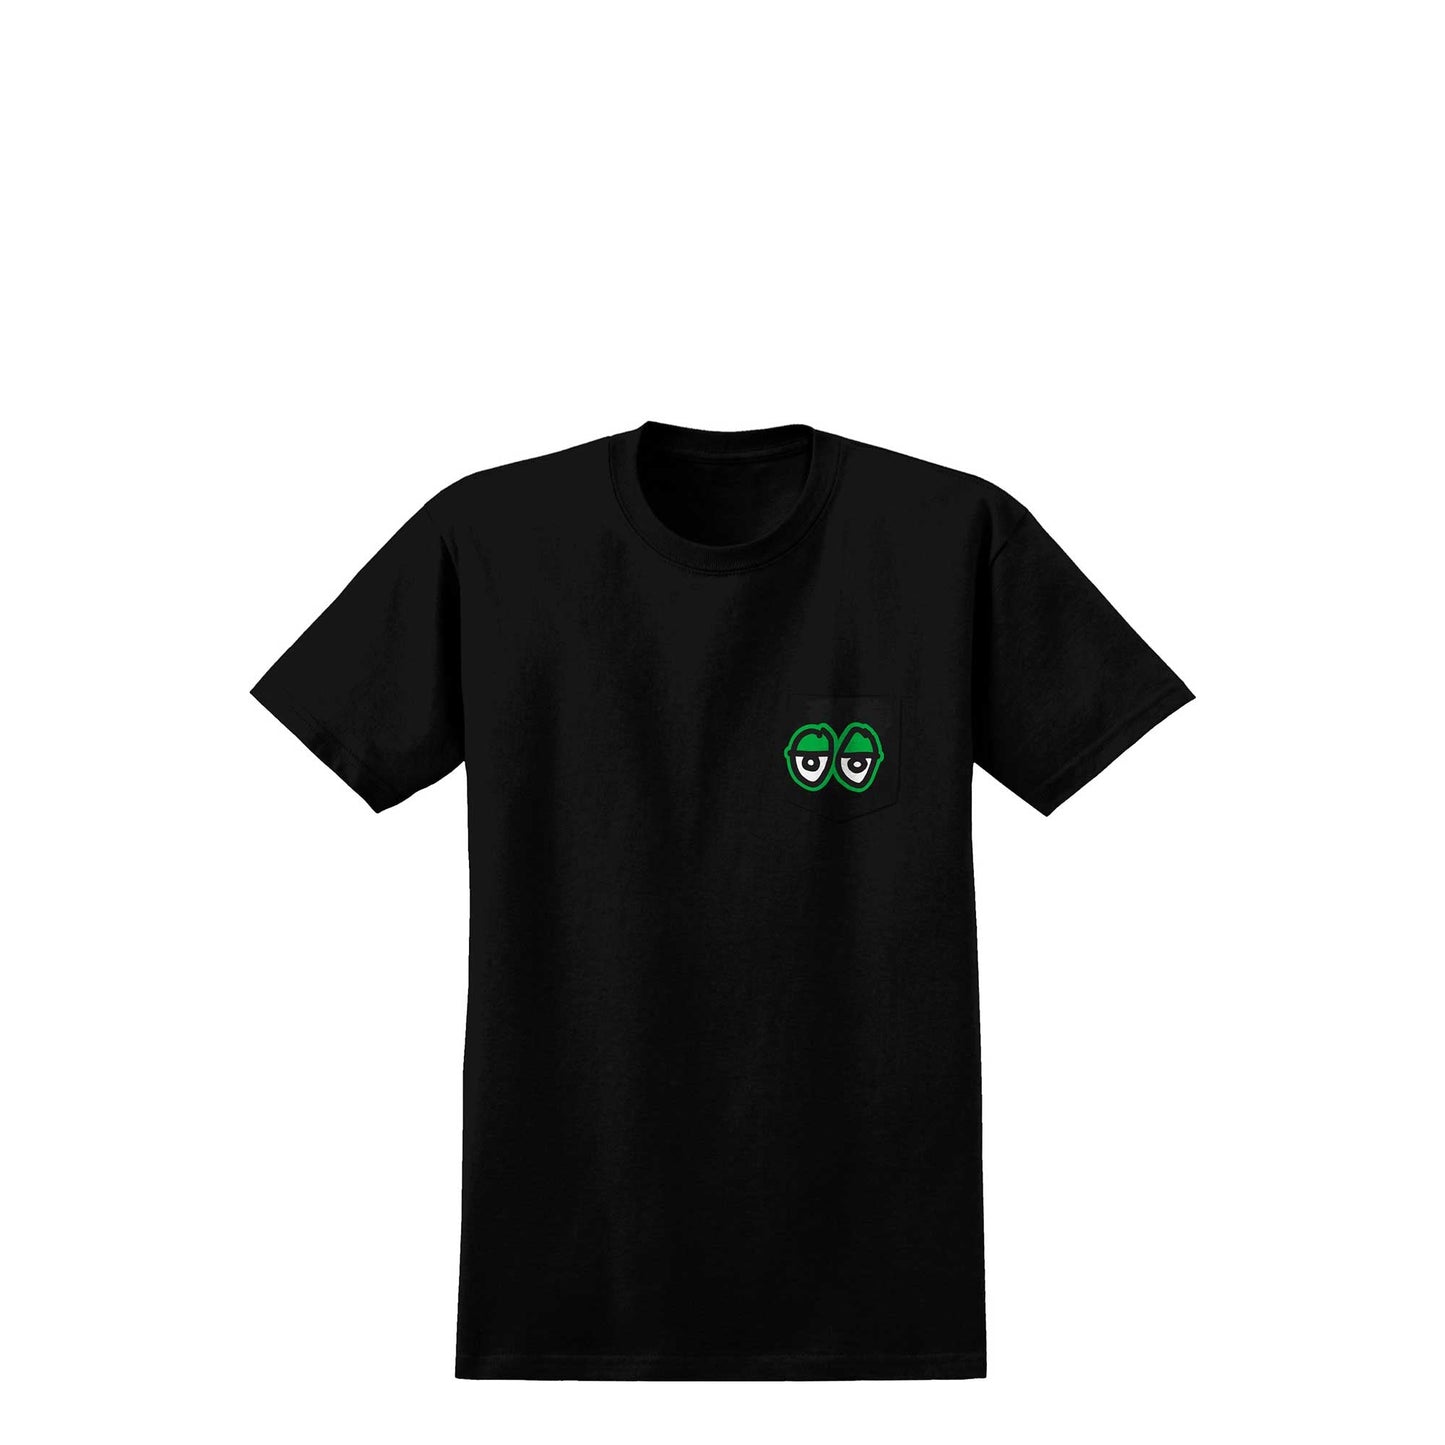 Krooked Strait Eyes S/S Pocket T-Shirt, black w/ green prints - Tiki Room Skateboards - 1